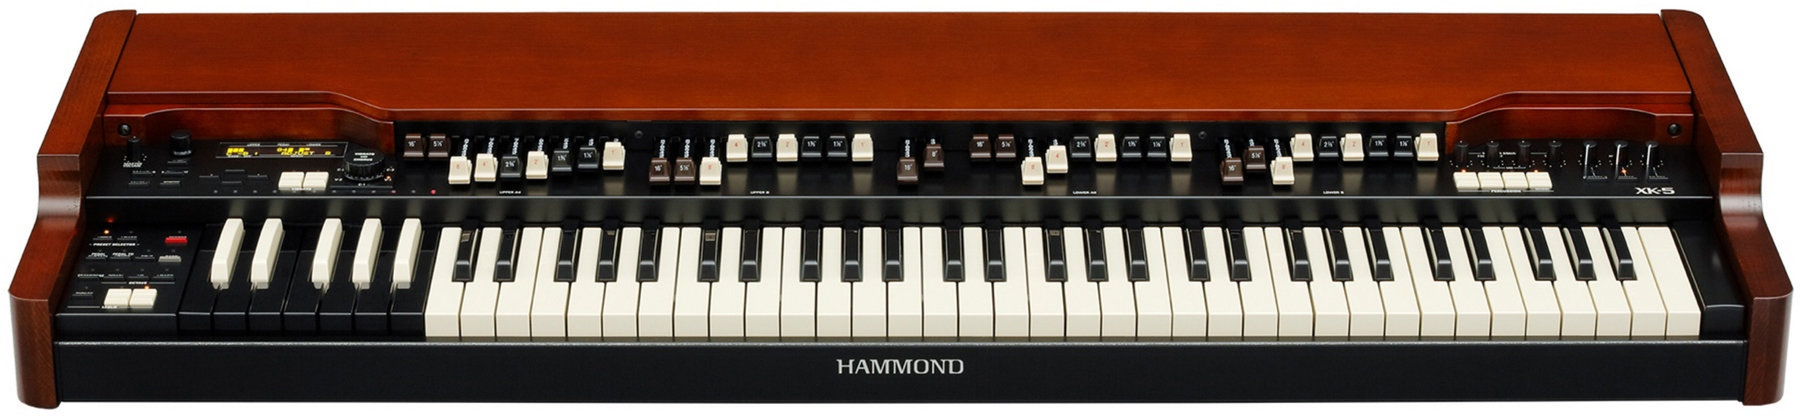 Electronic Organ Hammond XK-5